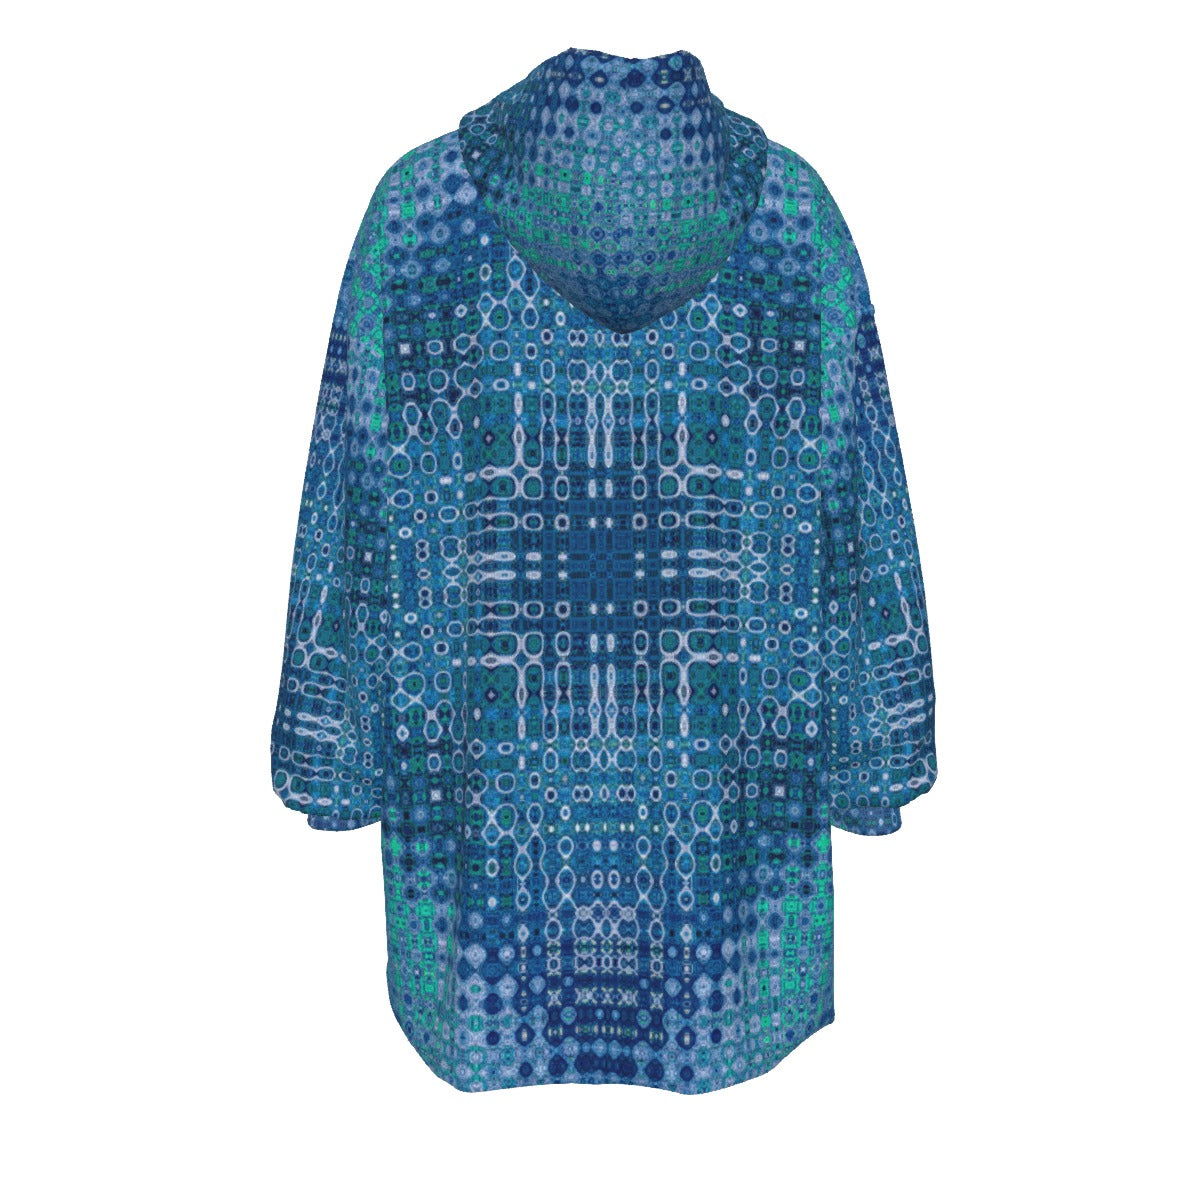 "Looped Circuits - Blue & Green" Snuggle Bliss Oversized Sherpa Fleece Hoodie